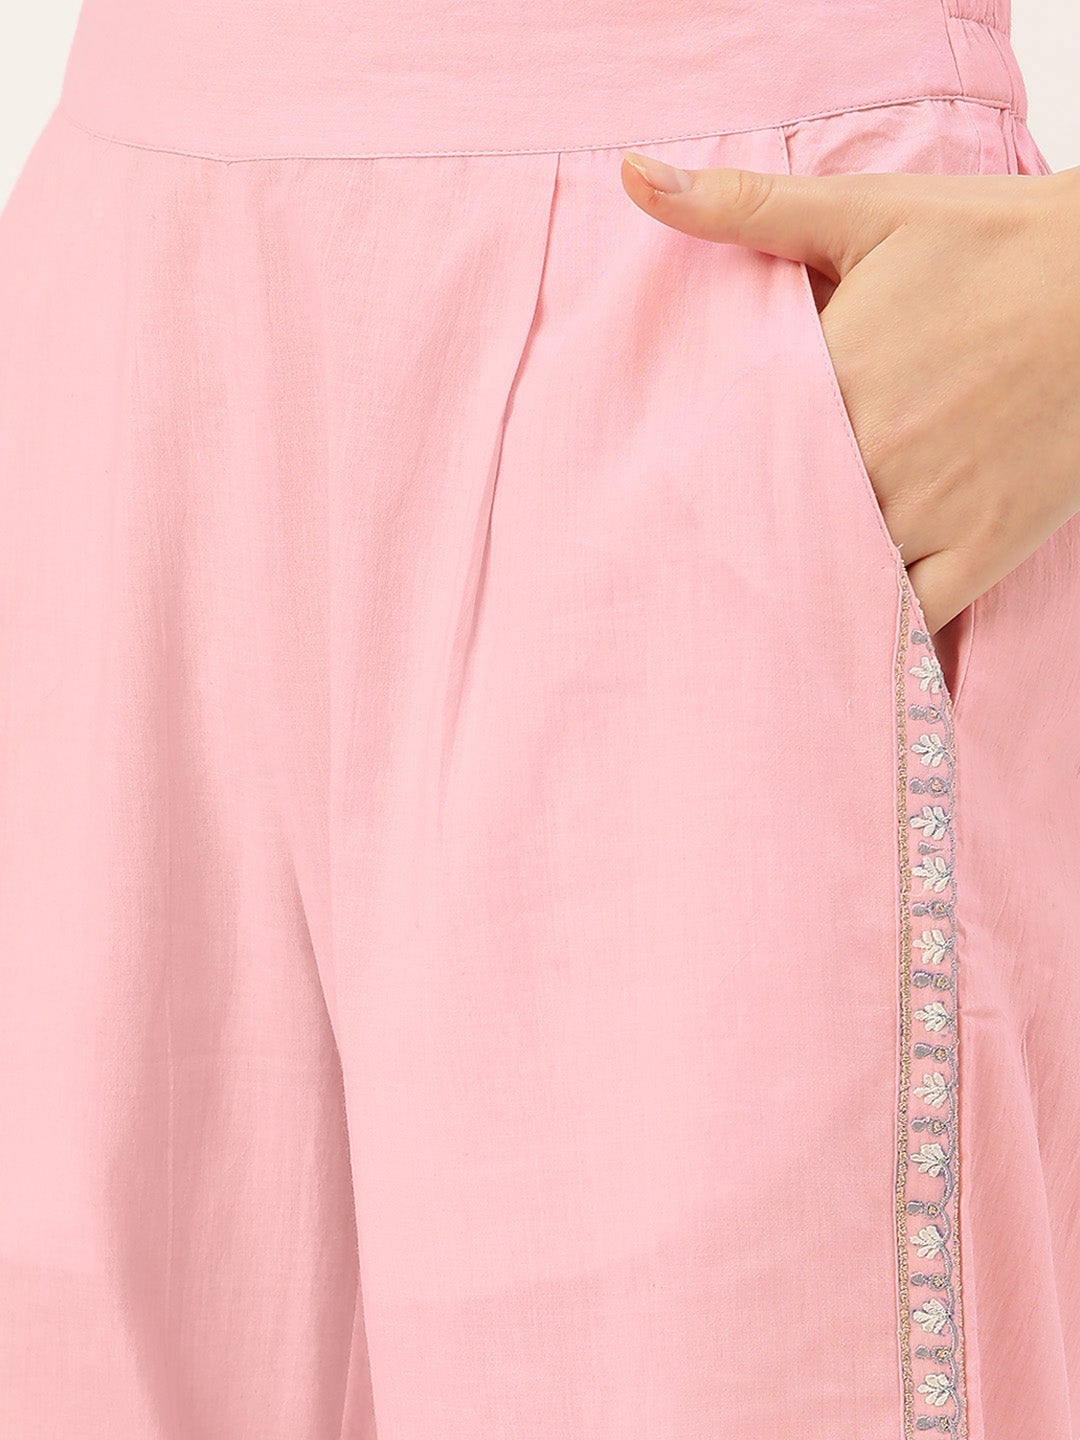 Sleeper Pastelle Oversize Pants in Pink | REVOLVE